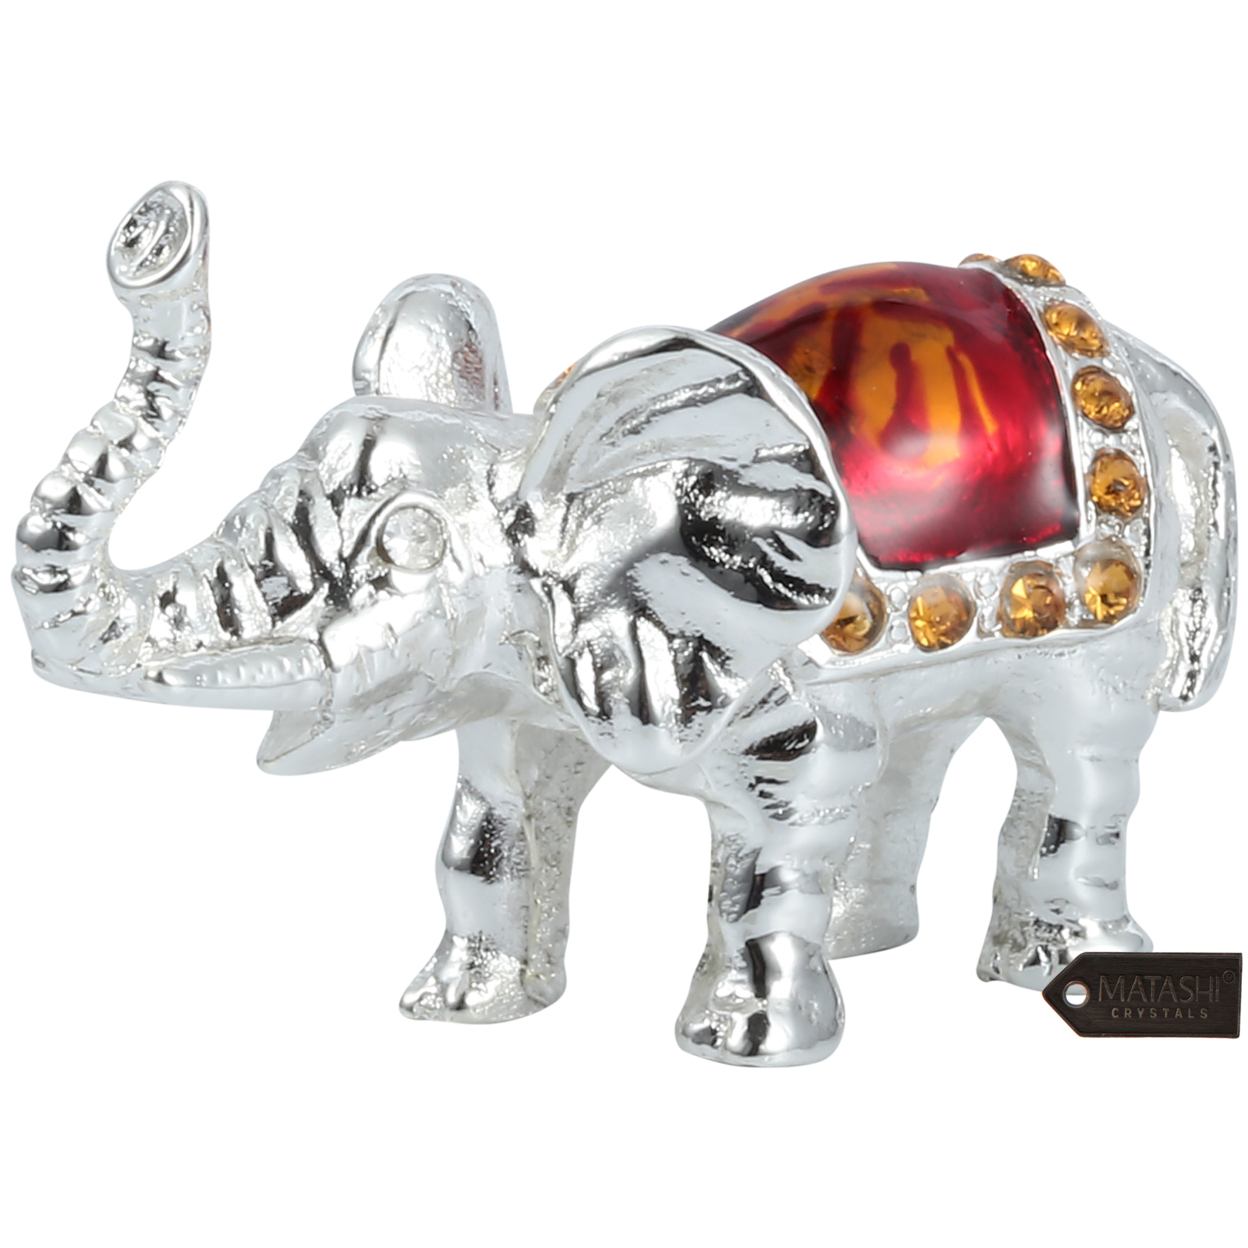 Matashi Silver Plated Crystal Studded Family Of Elephants Ornaments